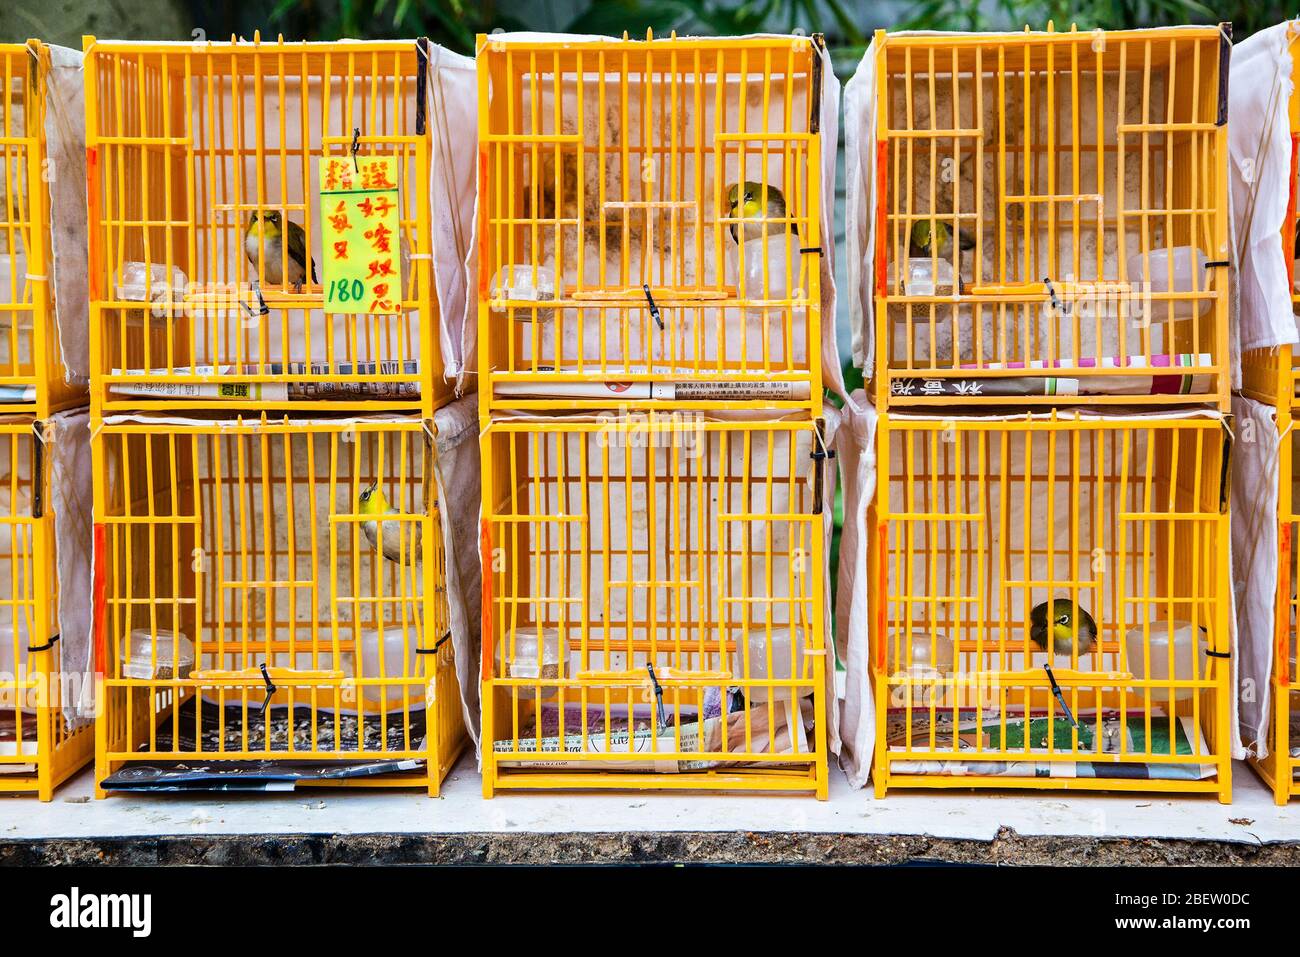 Hong Kong, Hong Kong SAR - July 10, 2017: Caged birds on sale at the Yuen Po Street bird garden in Kowloon, Hong Kong. The public park is designed lik Stock Photo